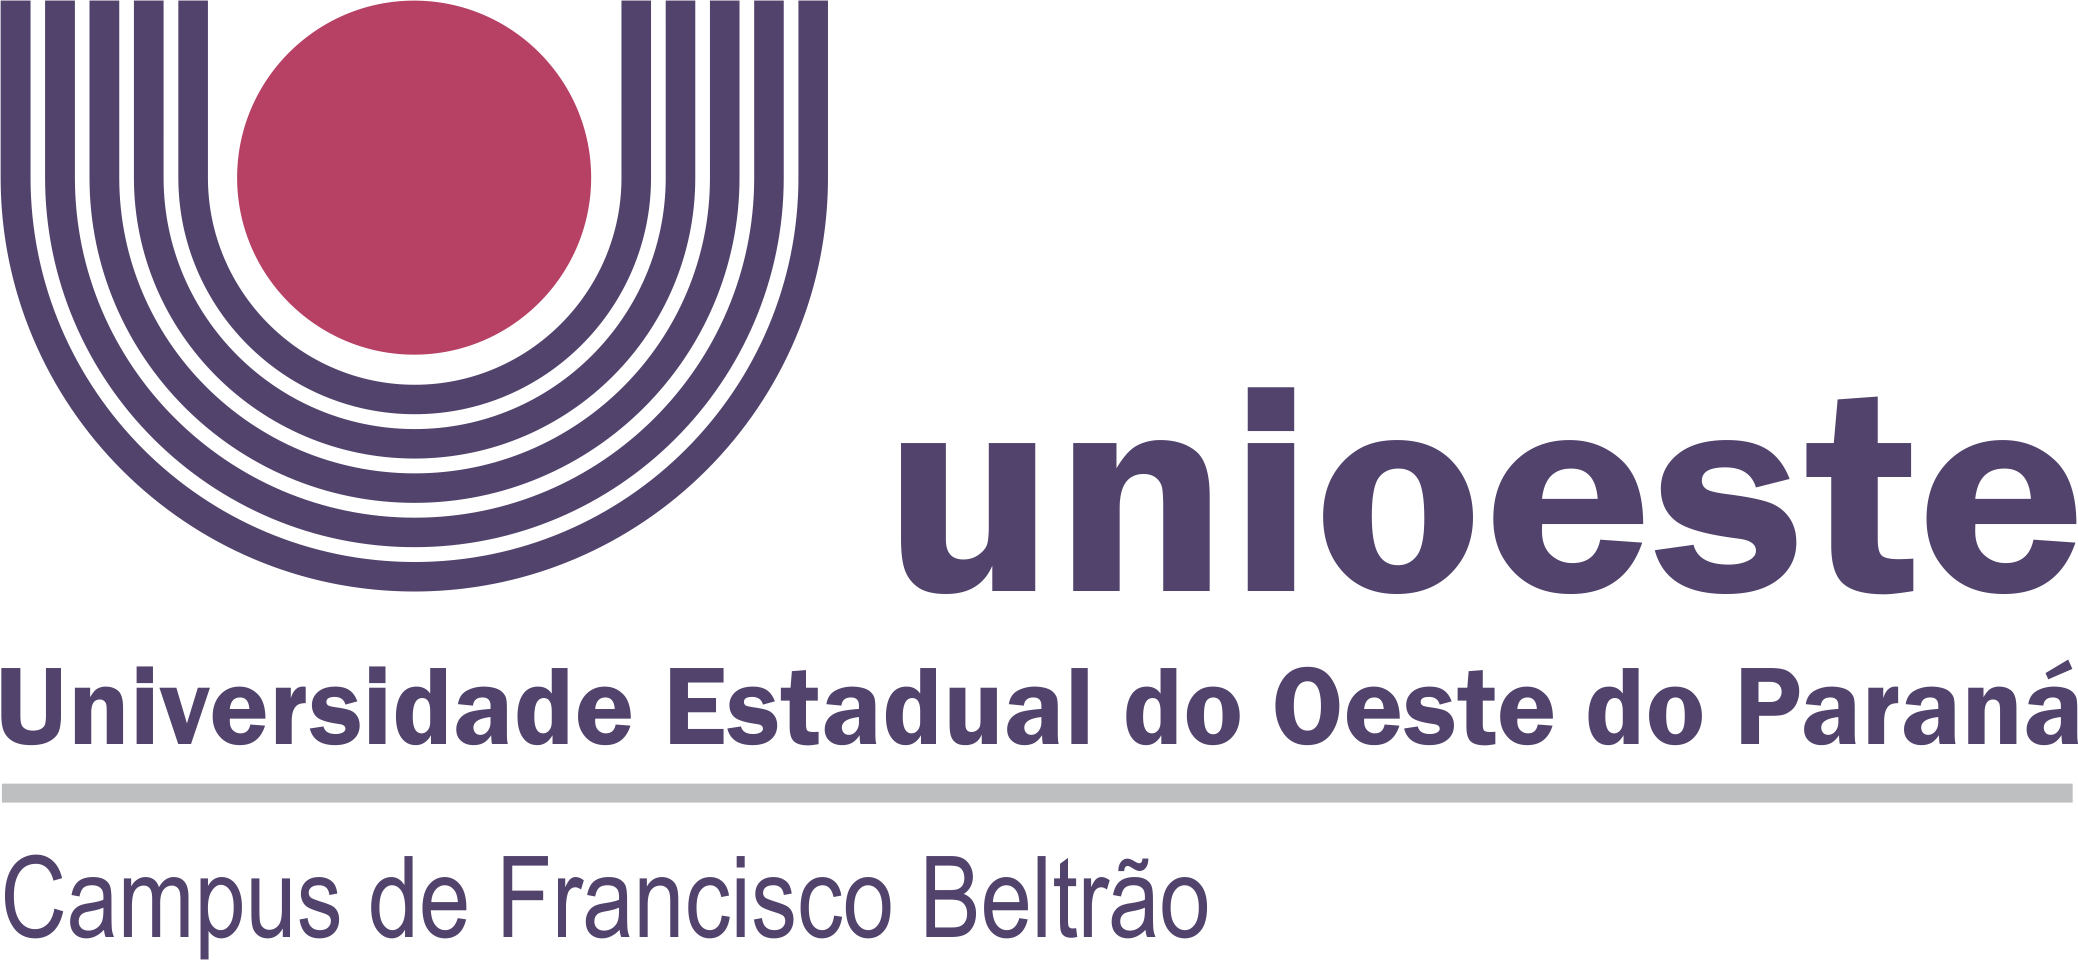 logotipo Unioeste Francisco Beltrão